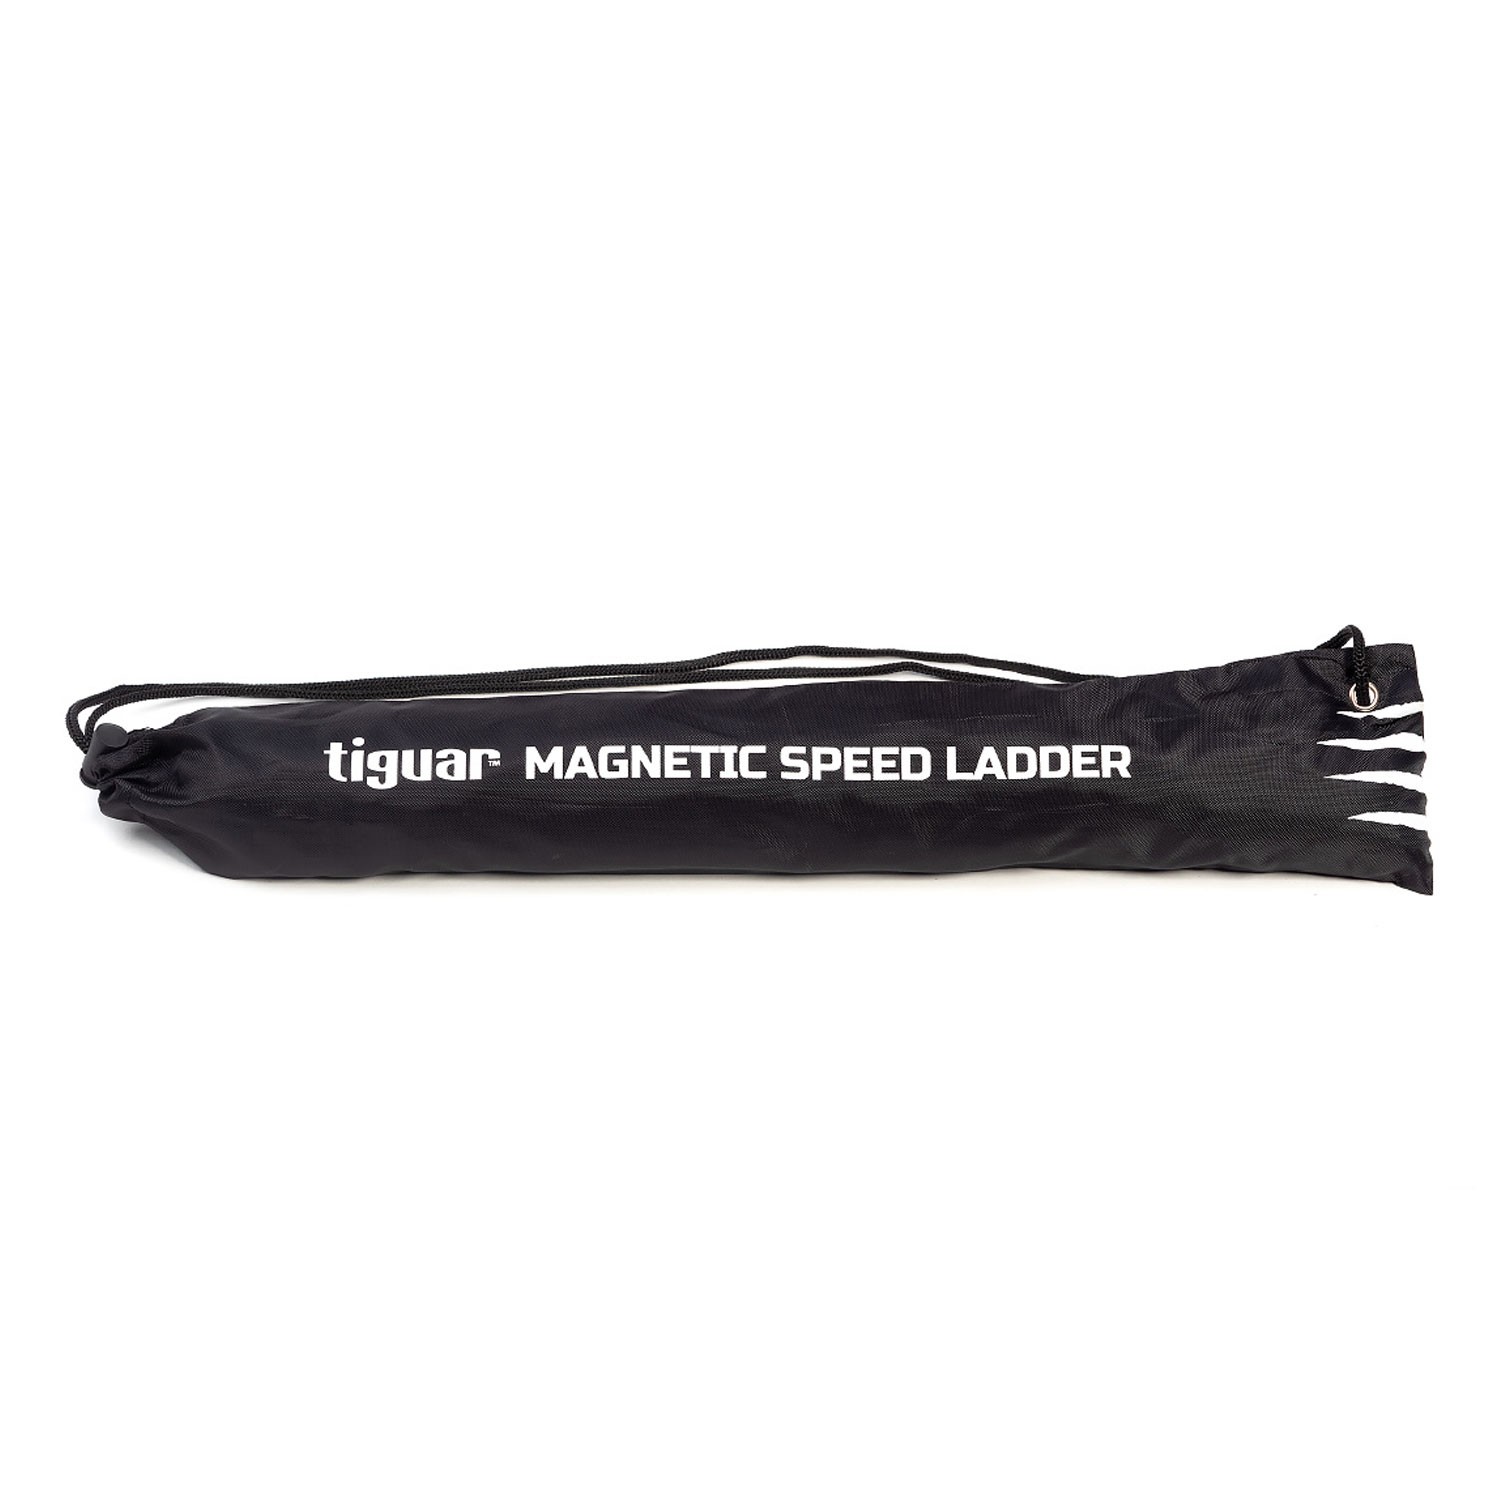 Tiguar Speed Ladder m. Magneten-6er Set inkl. Tasche